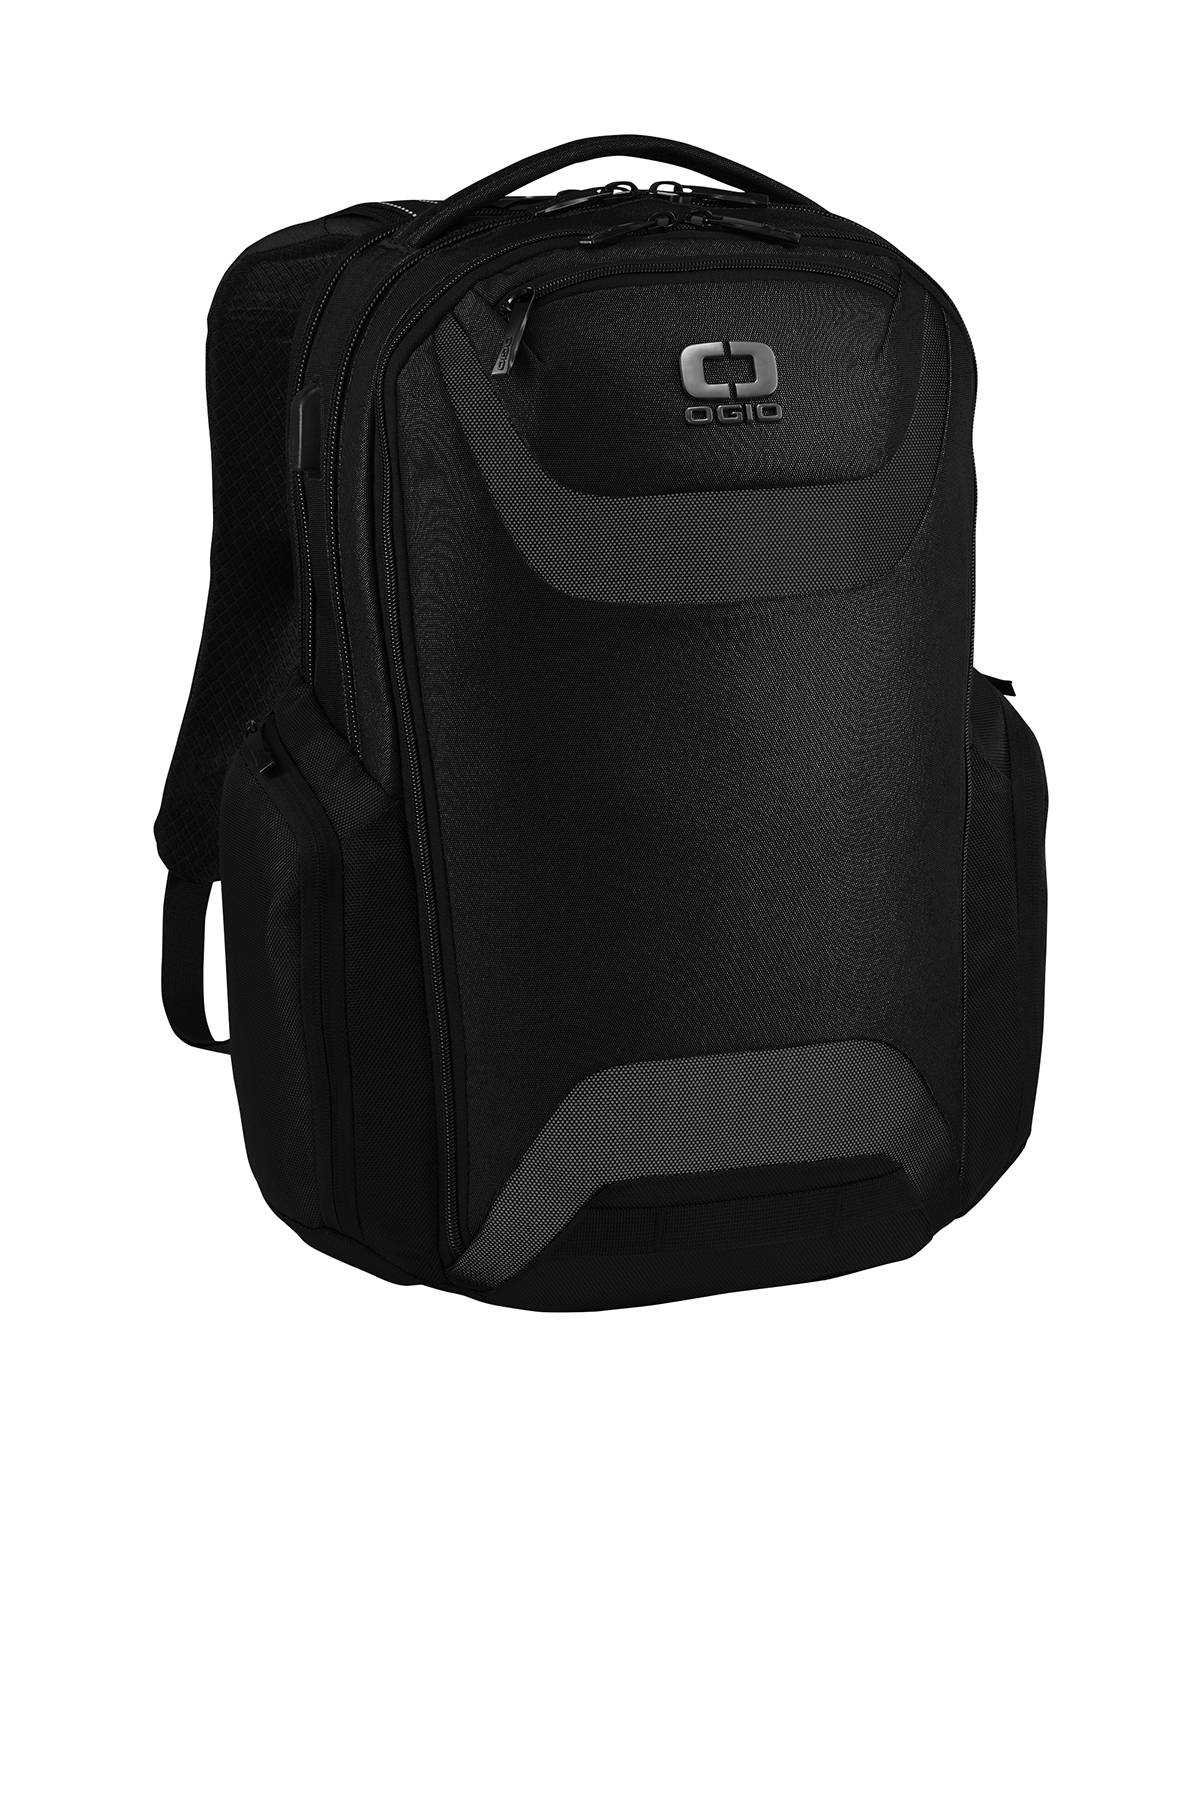 Ogio Connected Pack Backpacks Bags Sanmar